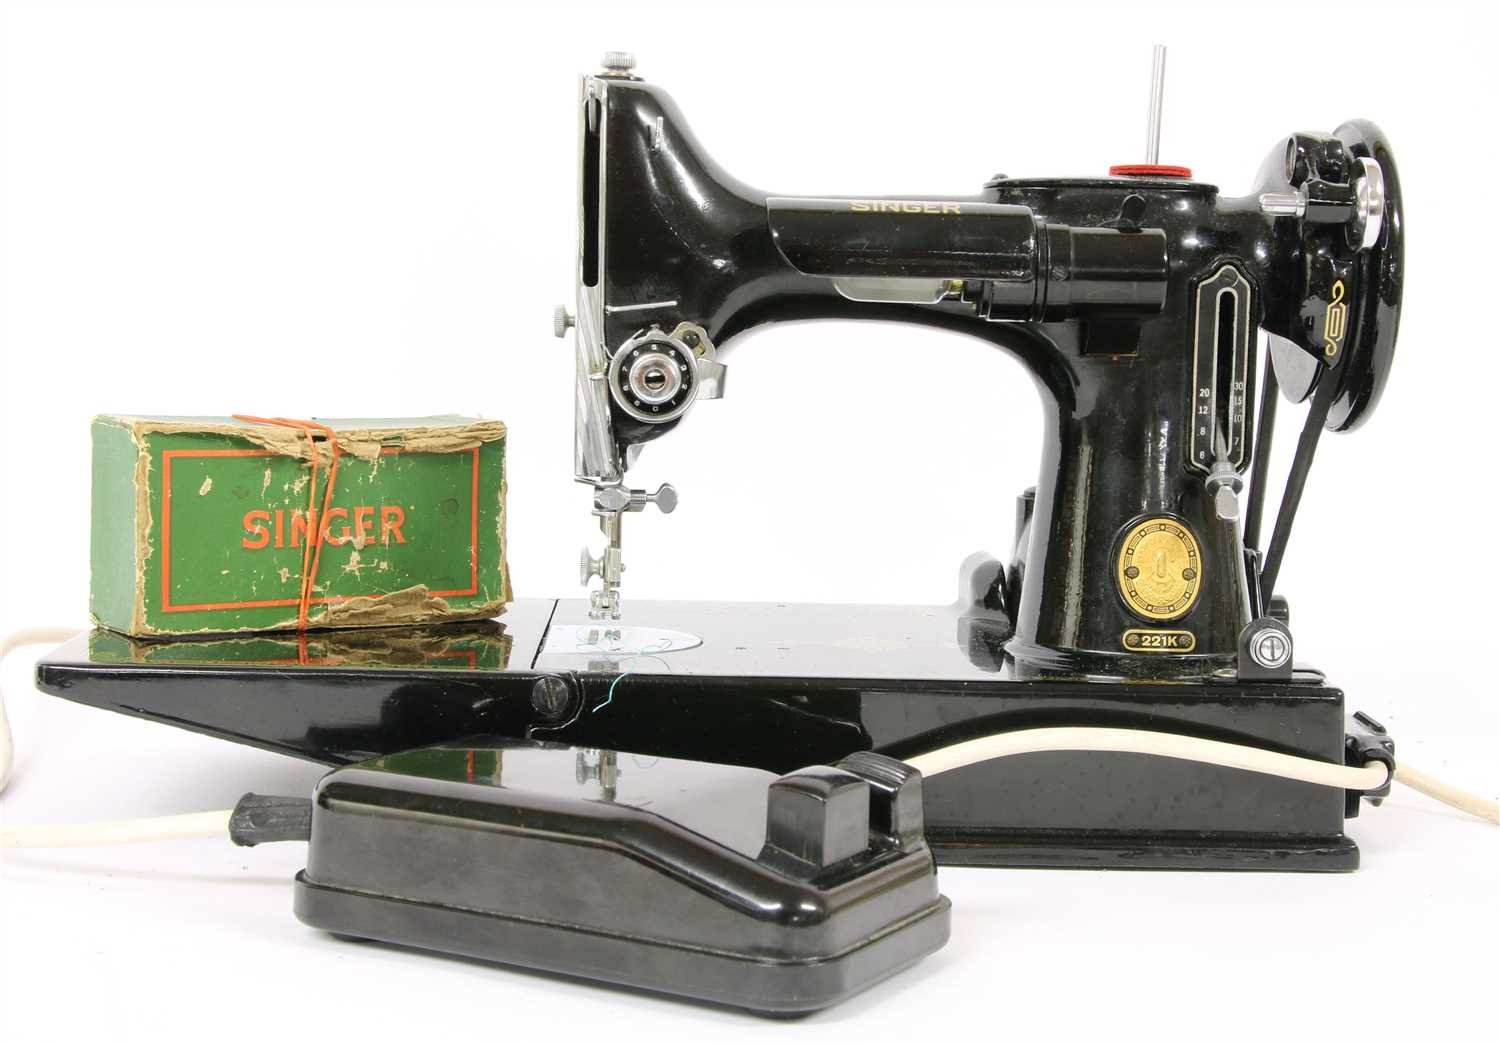 Lot 253 - A Singer 221K portable sewing machine